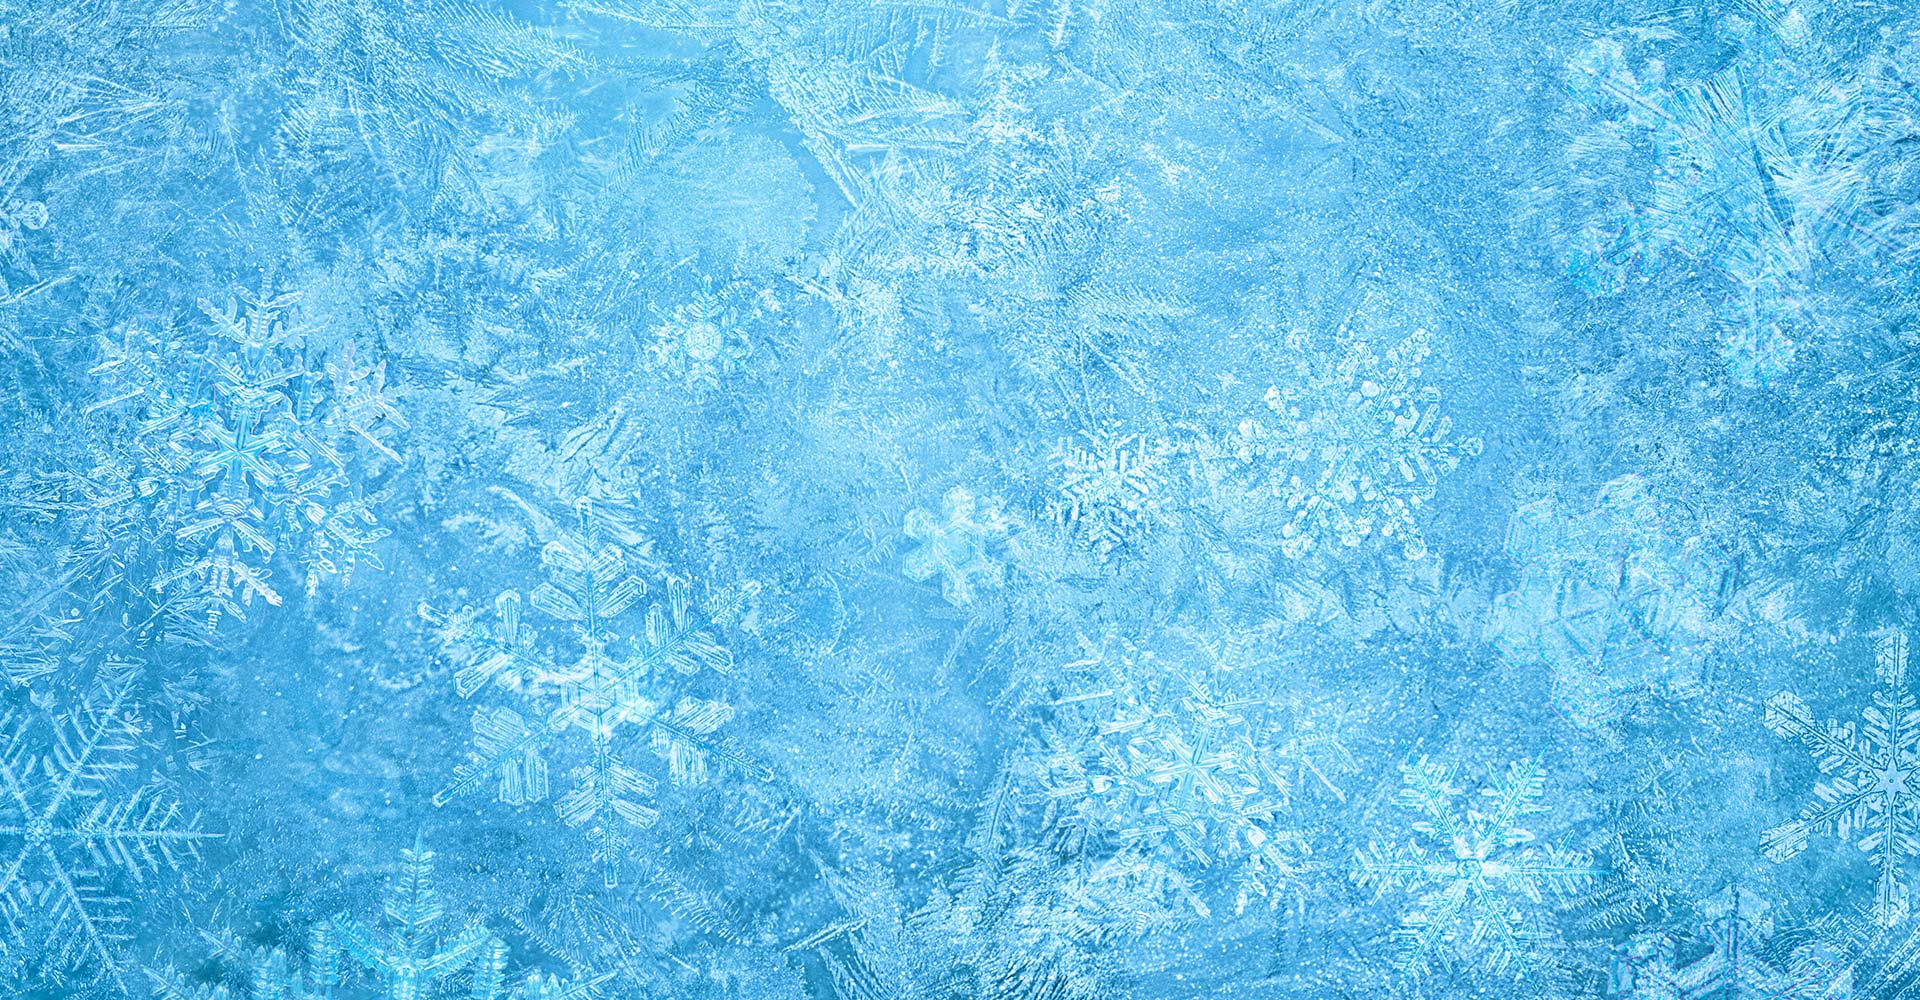 disney frozen ice background 2407. Background Check All